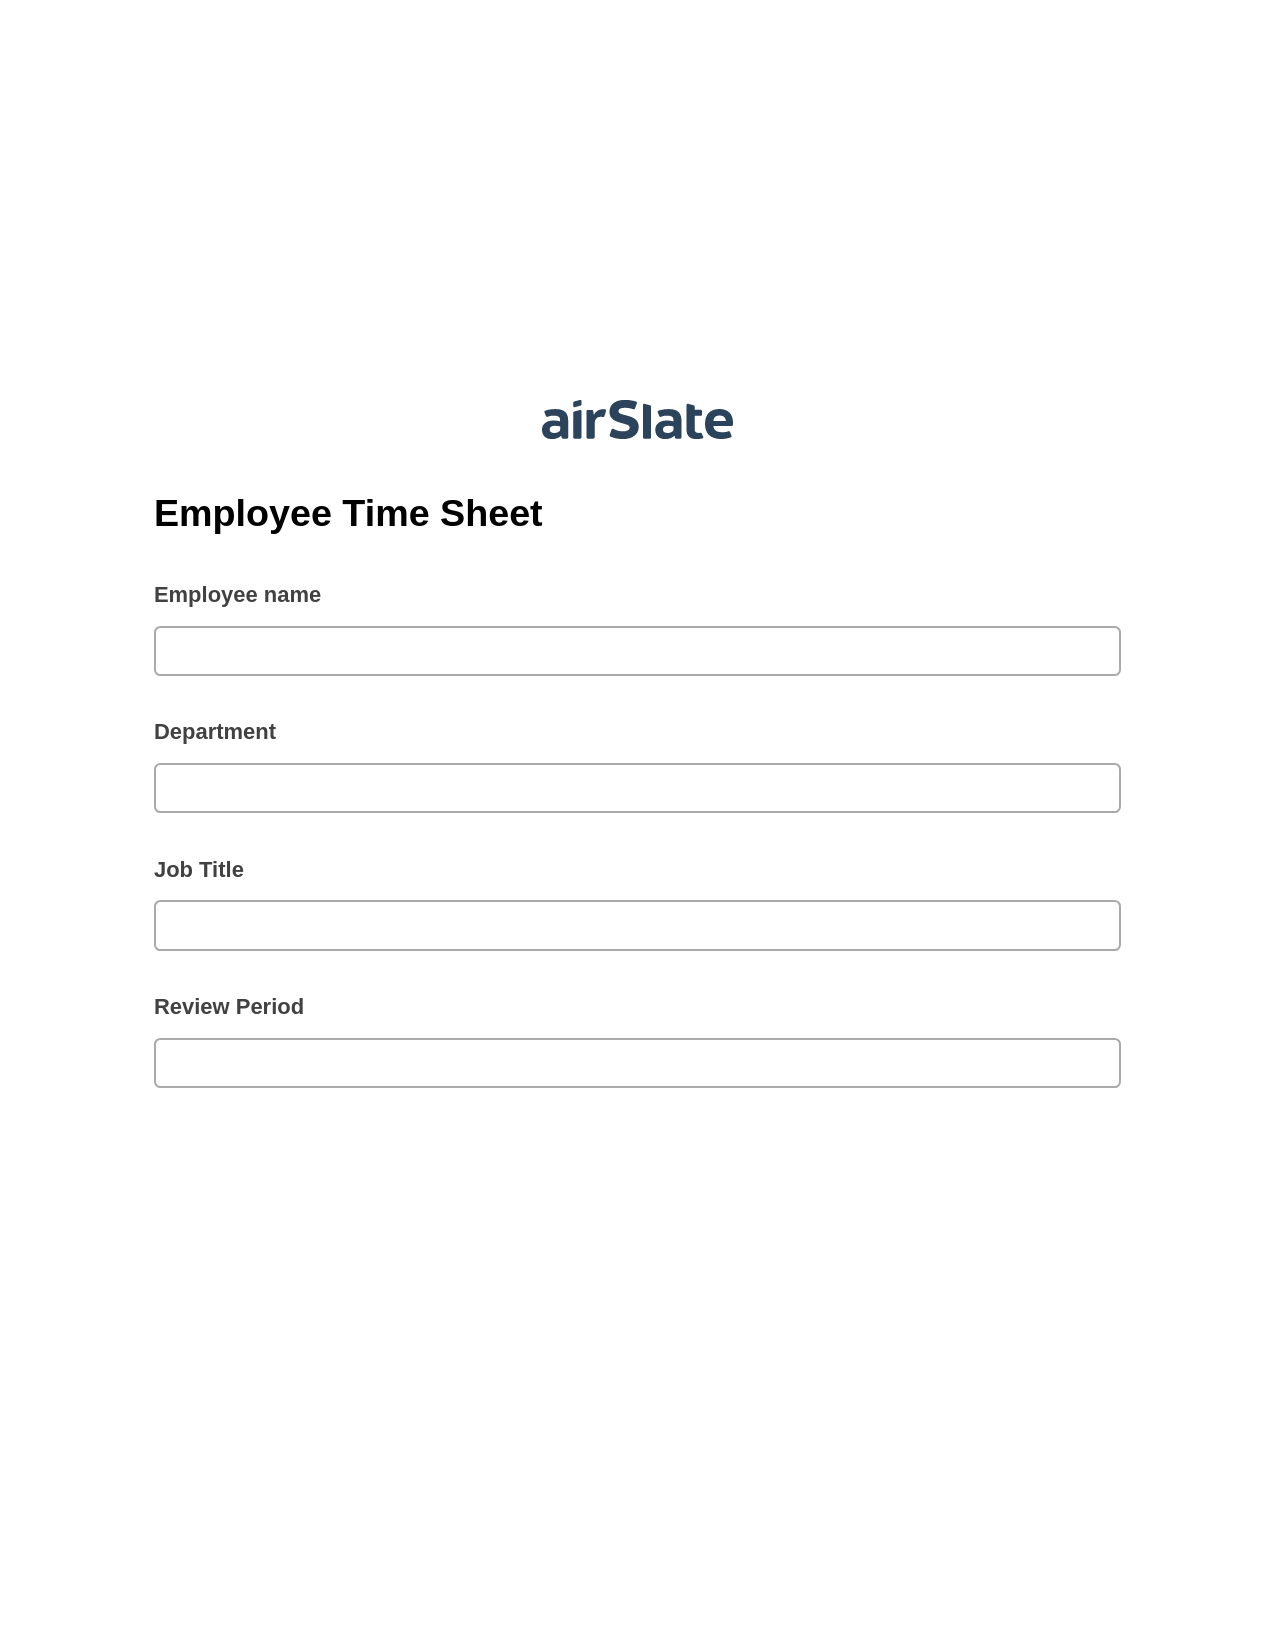 Multirole Employee Time Sheet Pre-fill from MySQL Bot, Create slate addon, Export to Google Sheet Bot